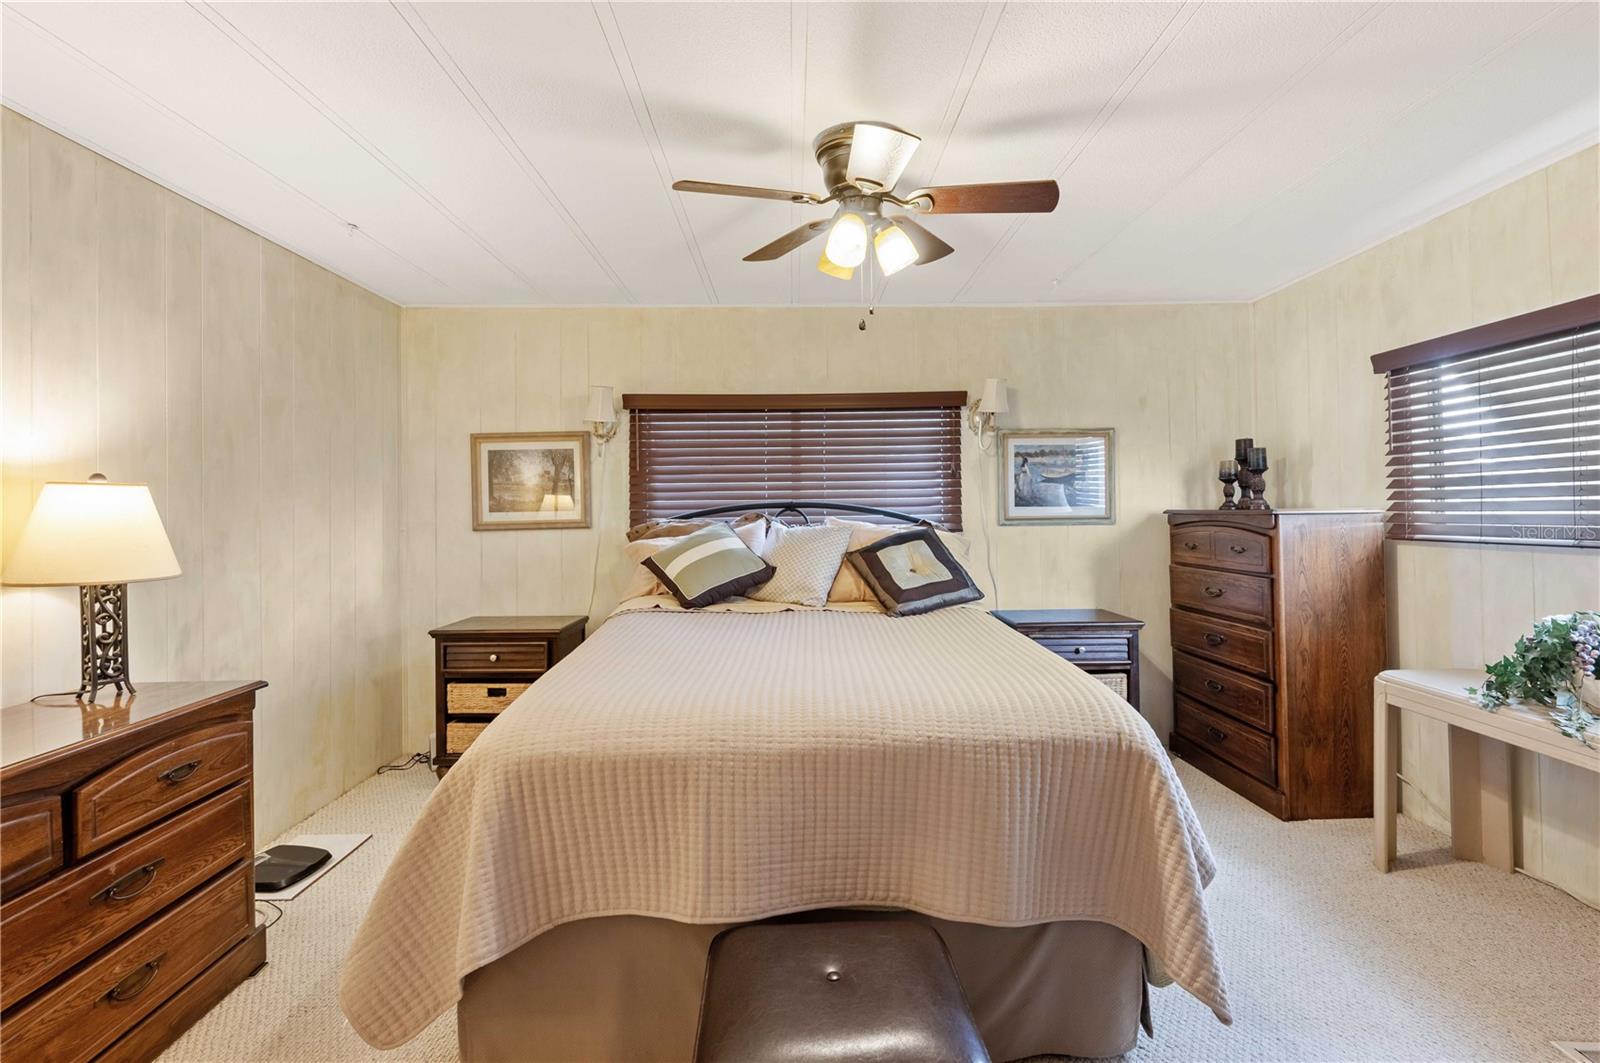 Main bedroom has Berber carpeting, ceiling fan, walk-in closet, and much more.